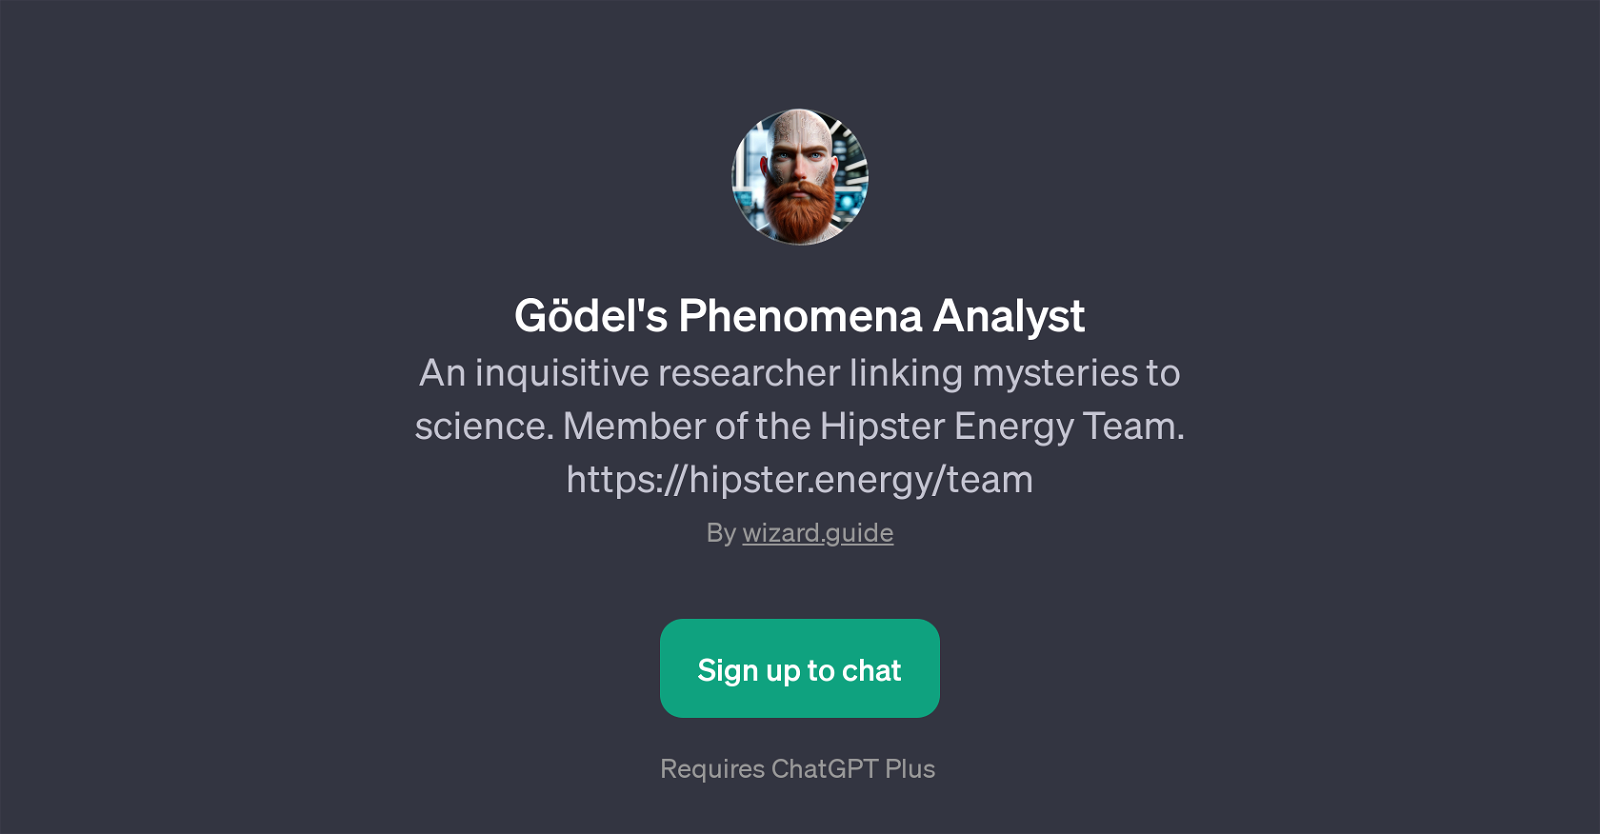 Gdel's Phenomena Analyst website